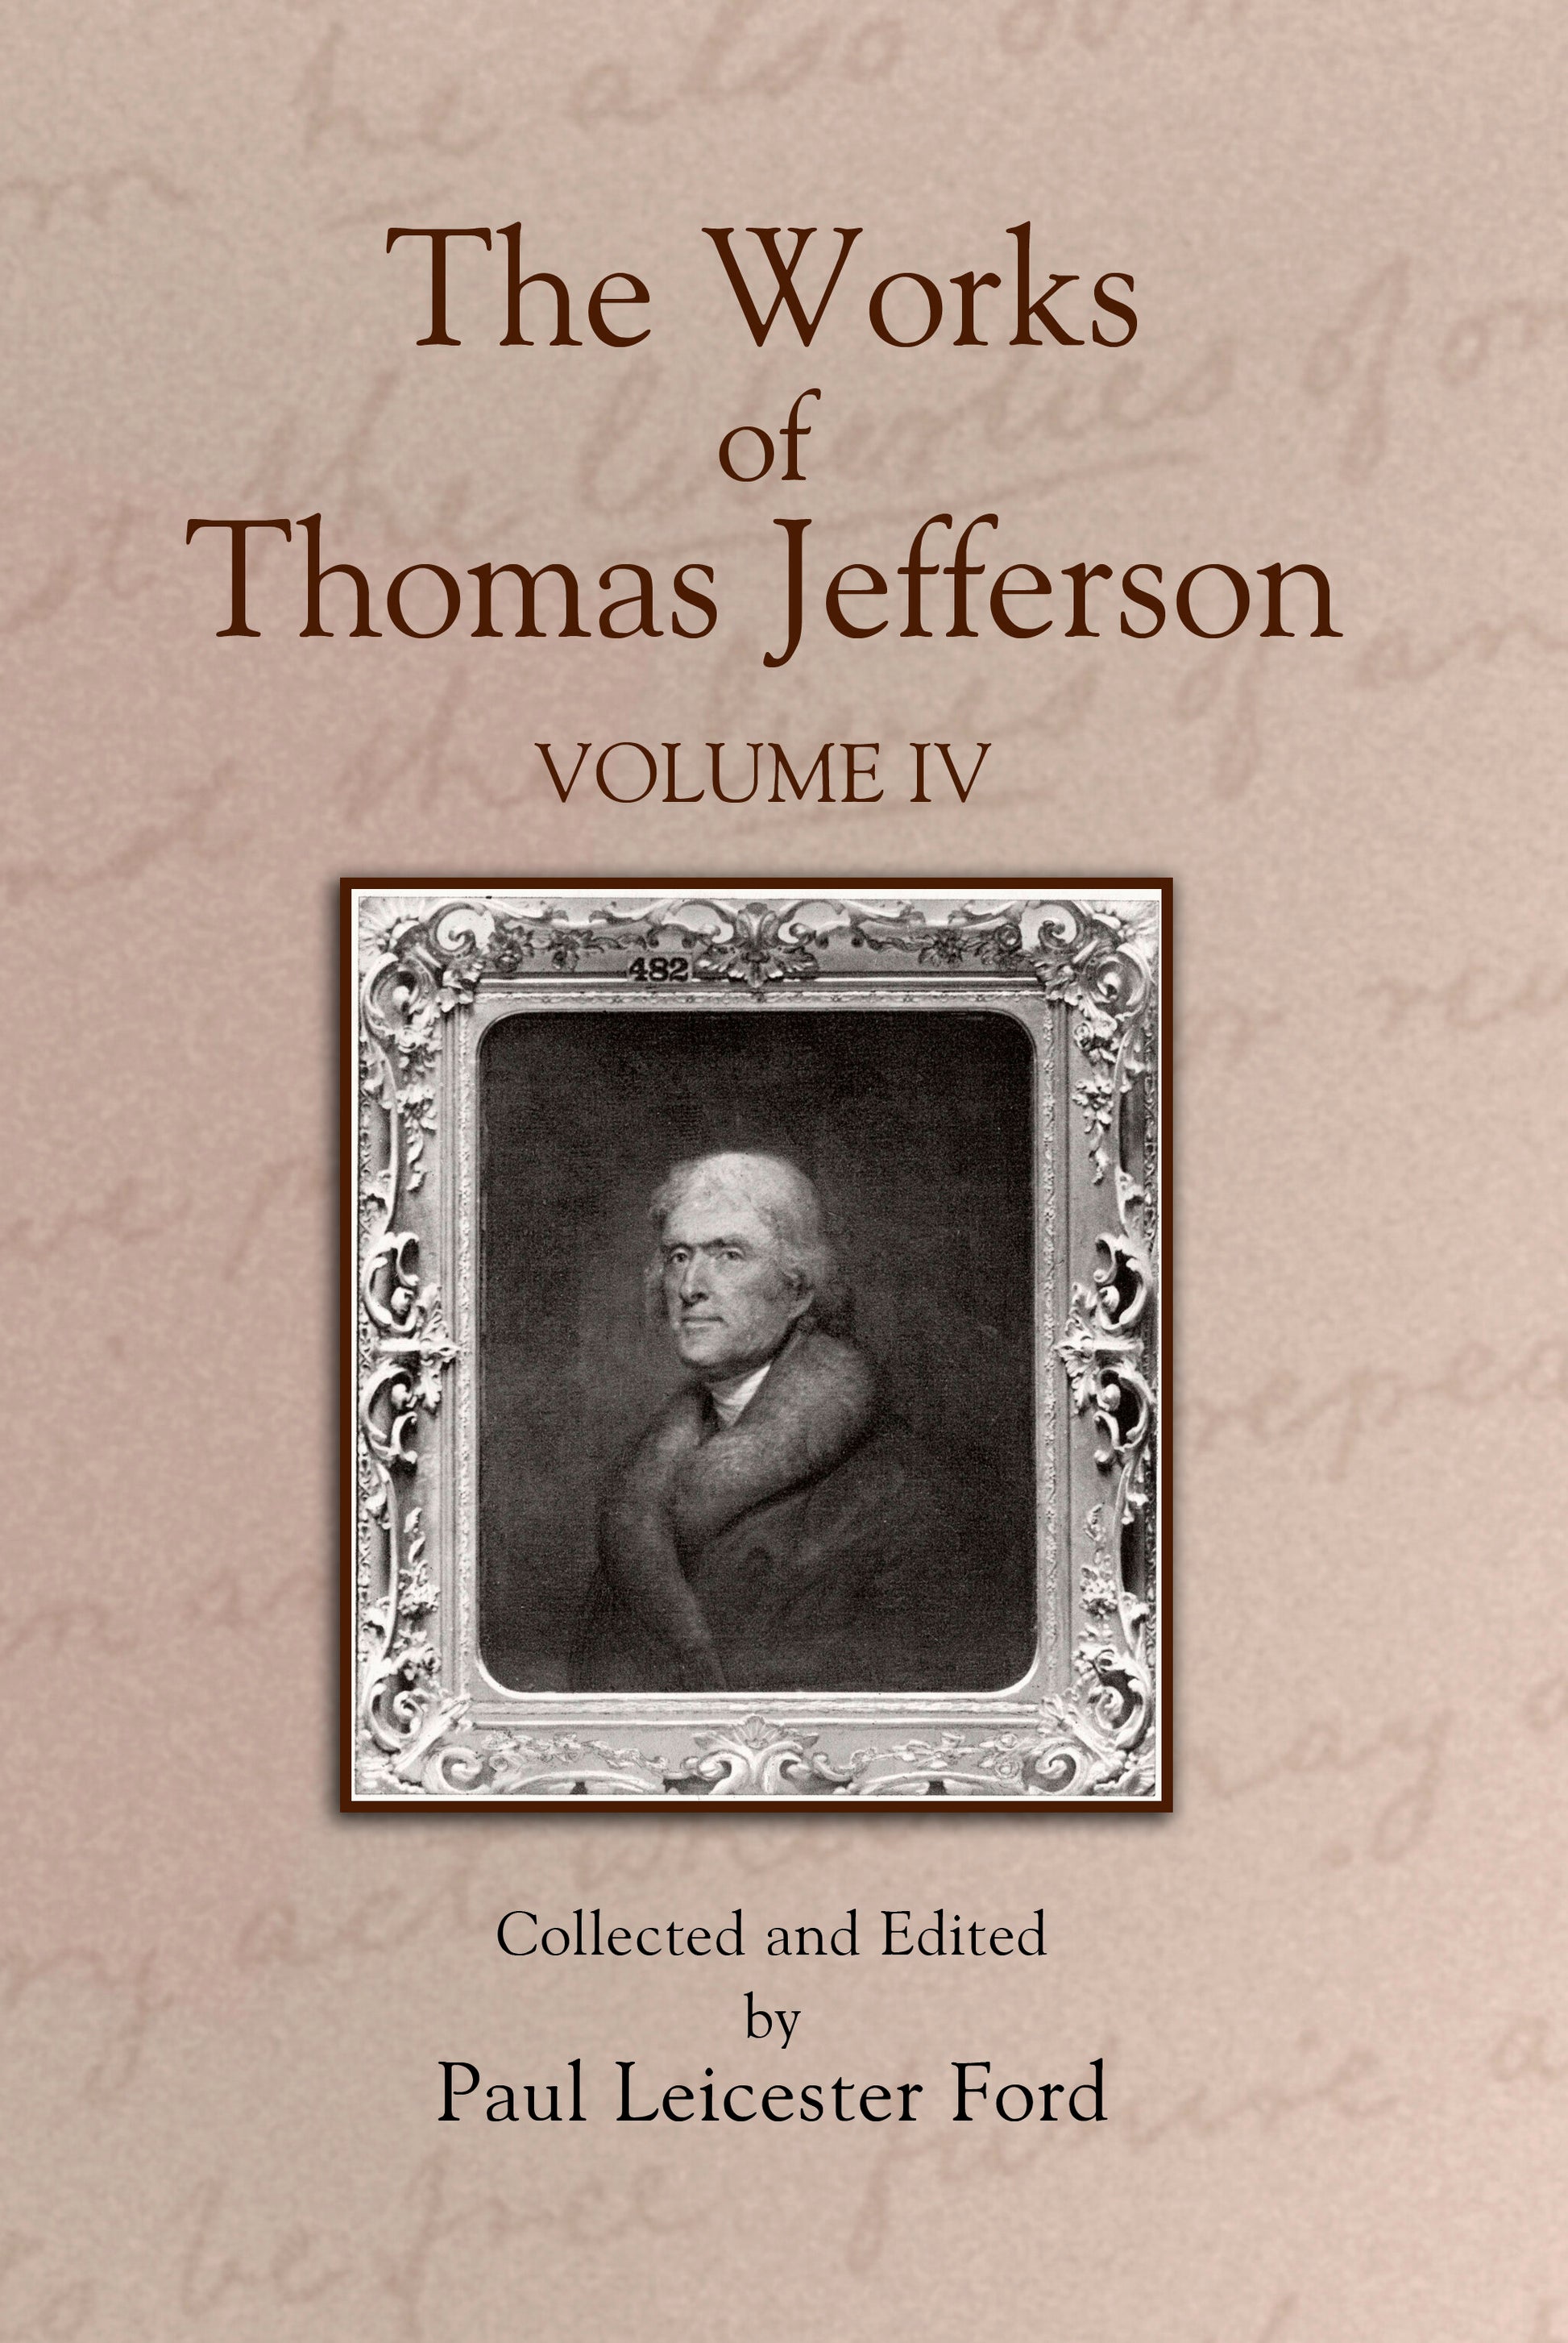 The Works of Thomas Jefferson: Volume IV